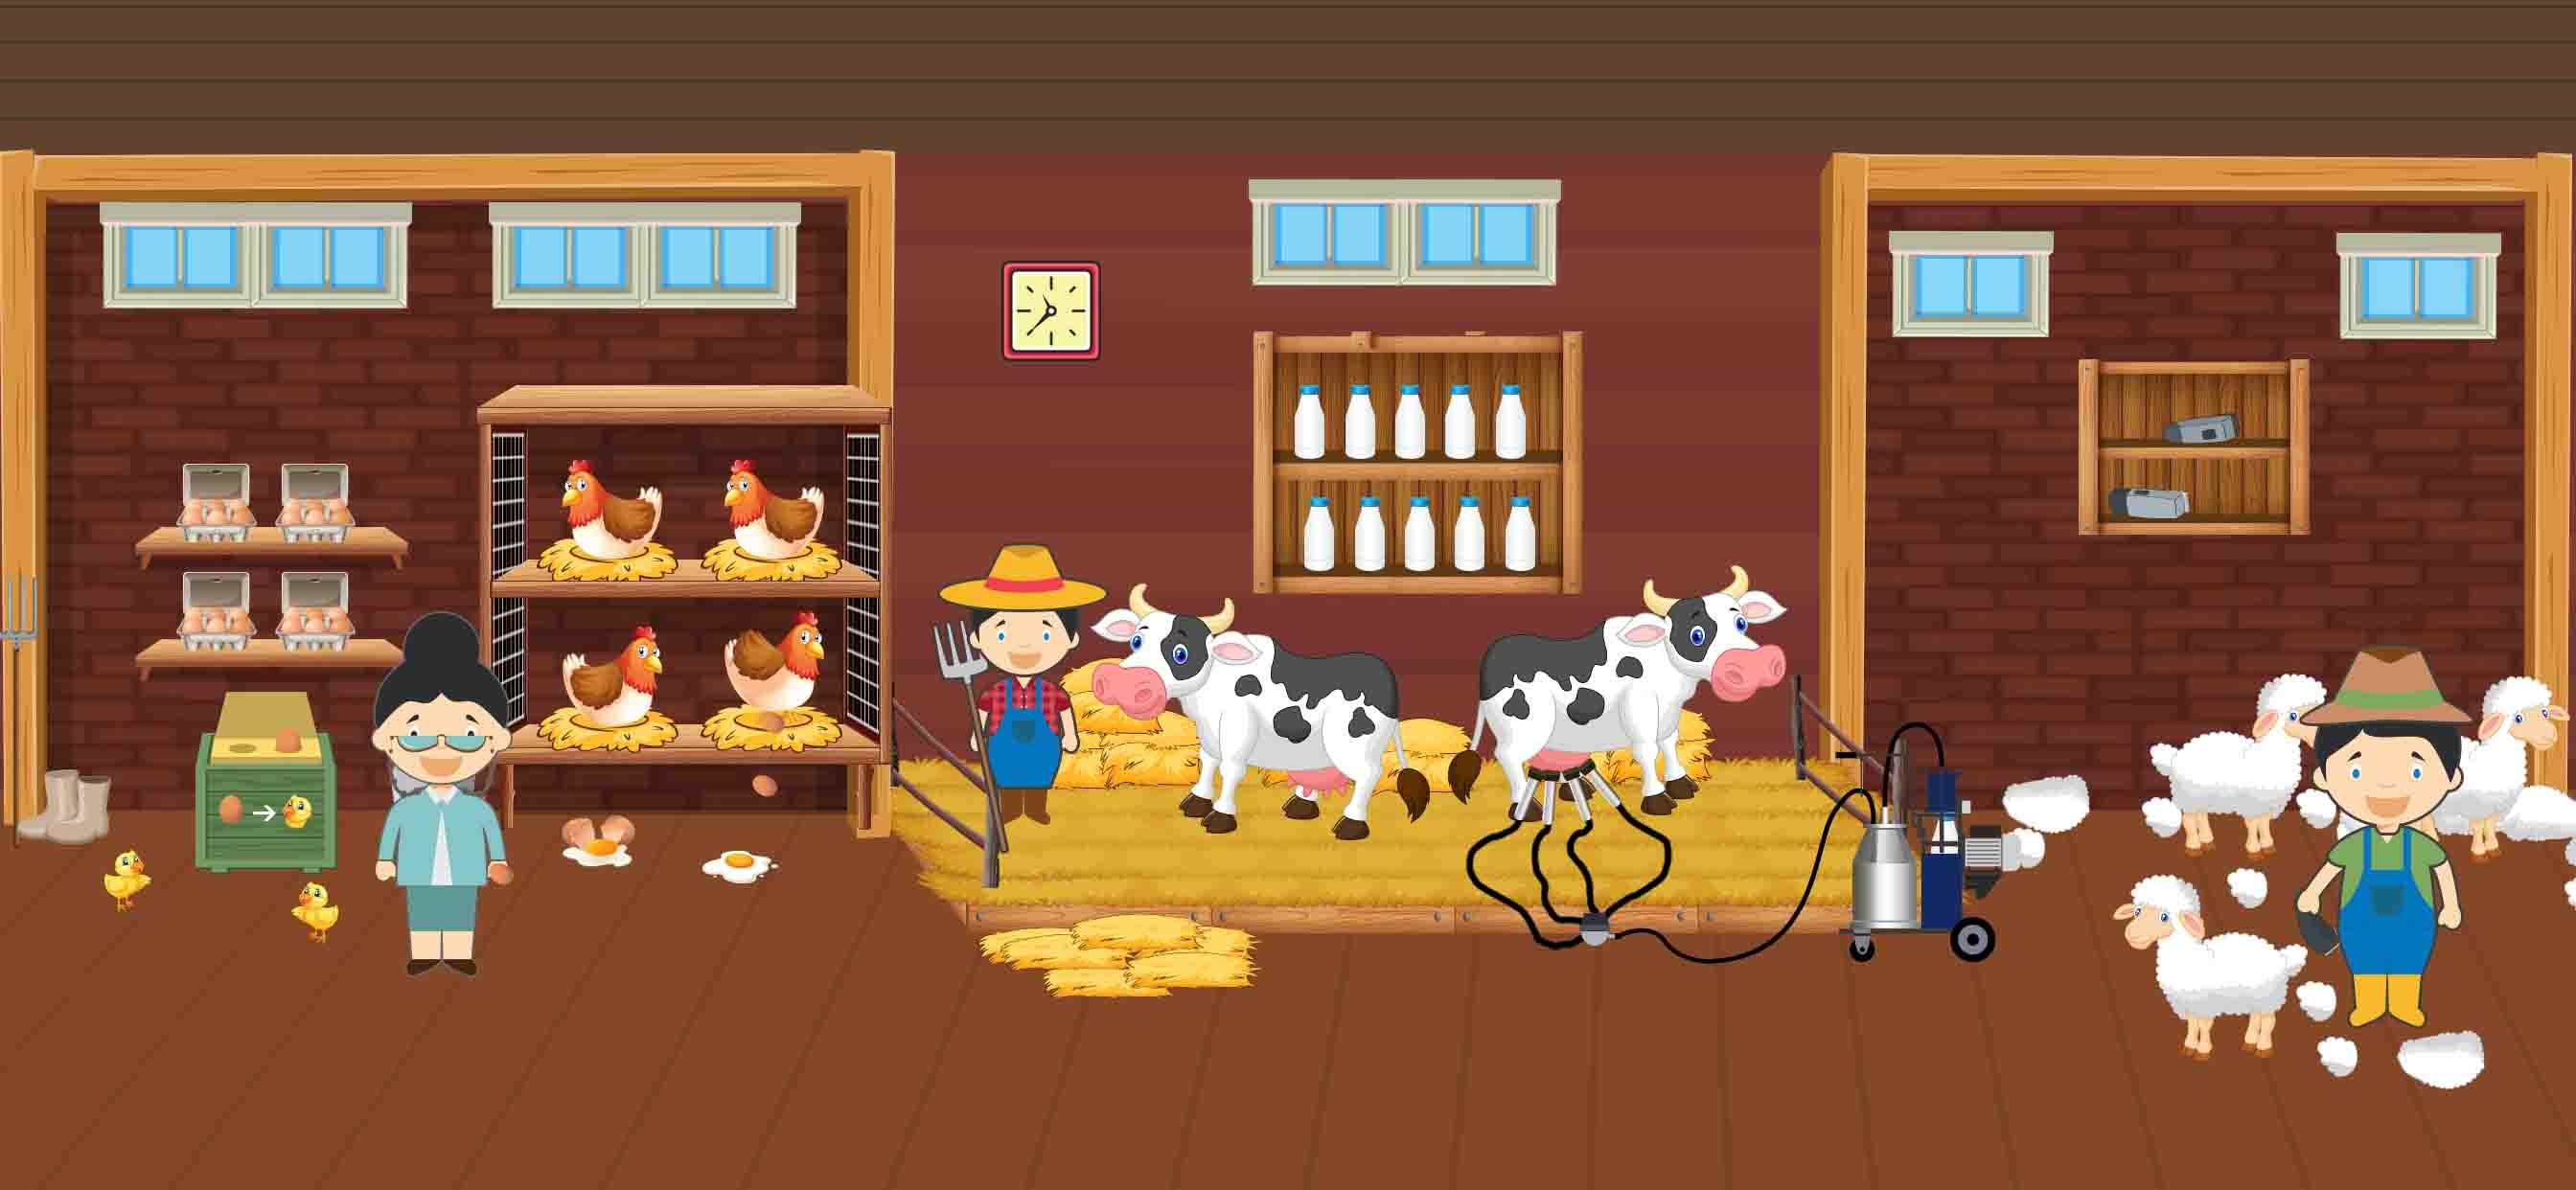 Pretend Town Farm House: Explore Farming World 1.1 Screenshot 2